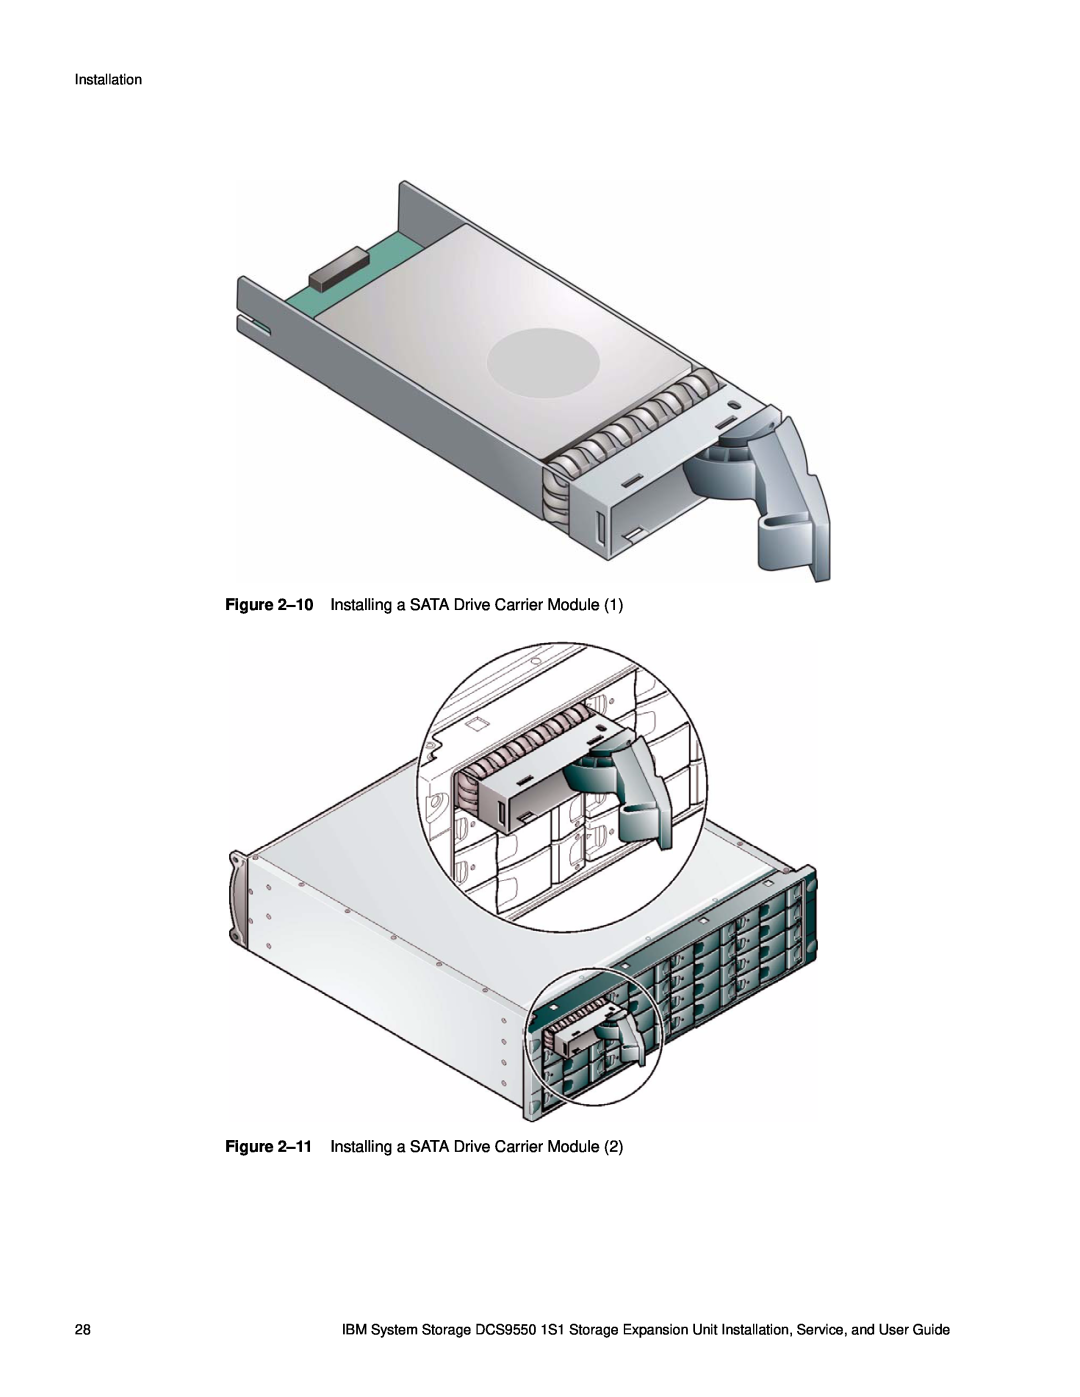 IBM DCS9550 1S1 manual 10 Installing a SATA Drive Carrier Module, 11 Installing a SATA Drive Carrier Module, Installation 